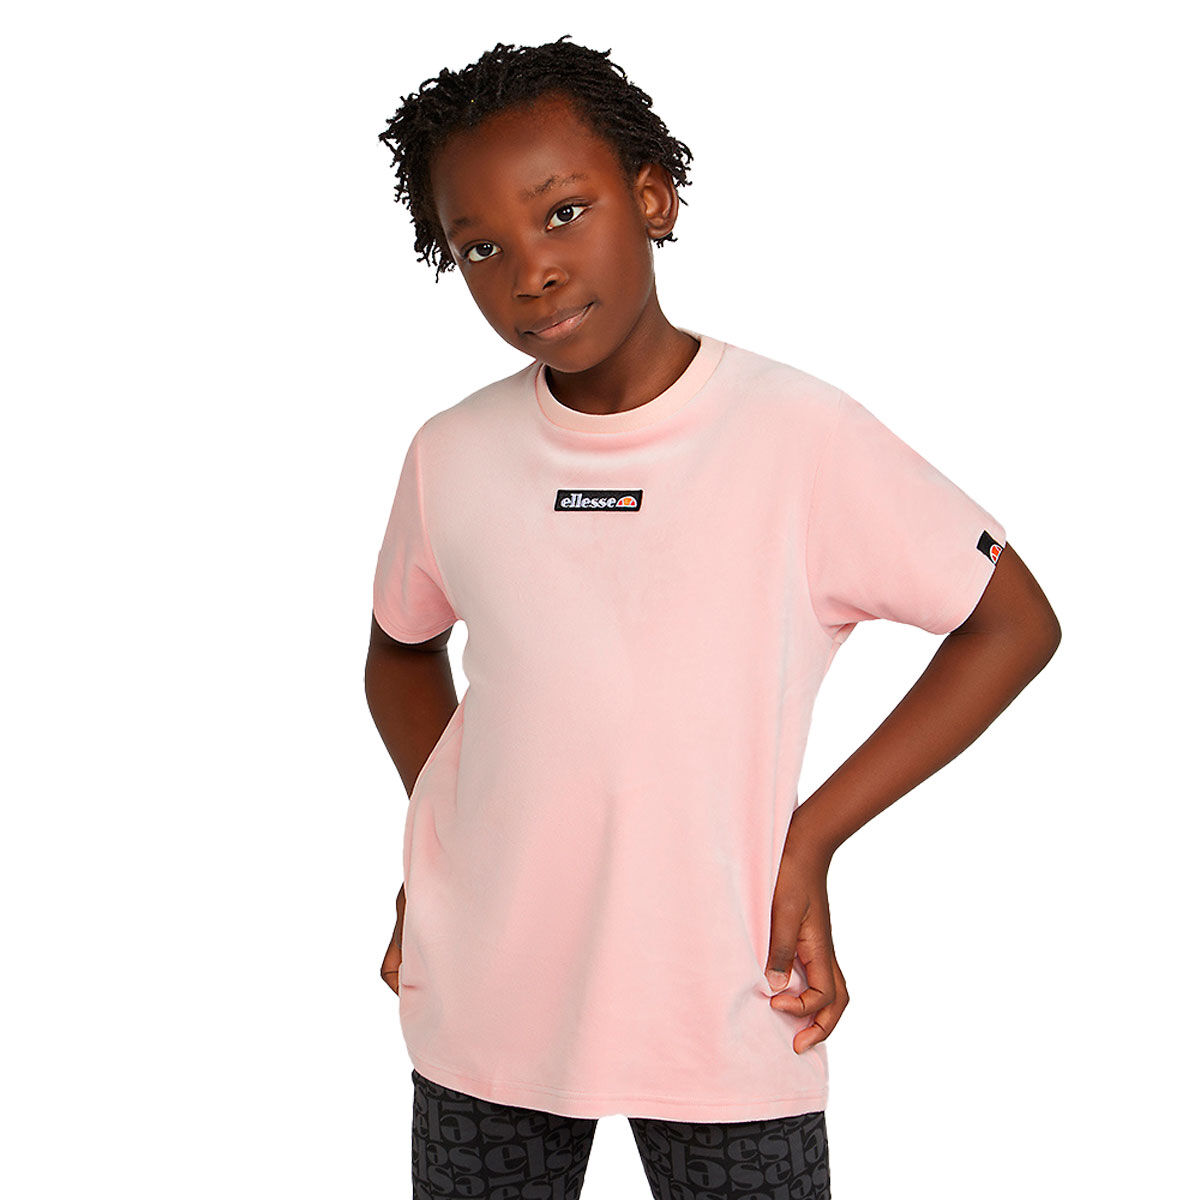 Majestic, Shirts & Tops, Girlsteen Pink Phillies Shirt